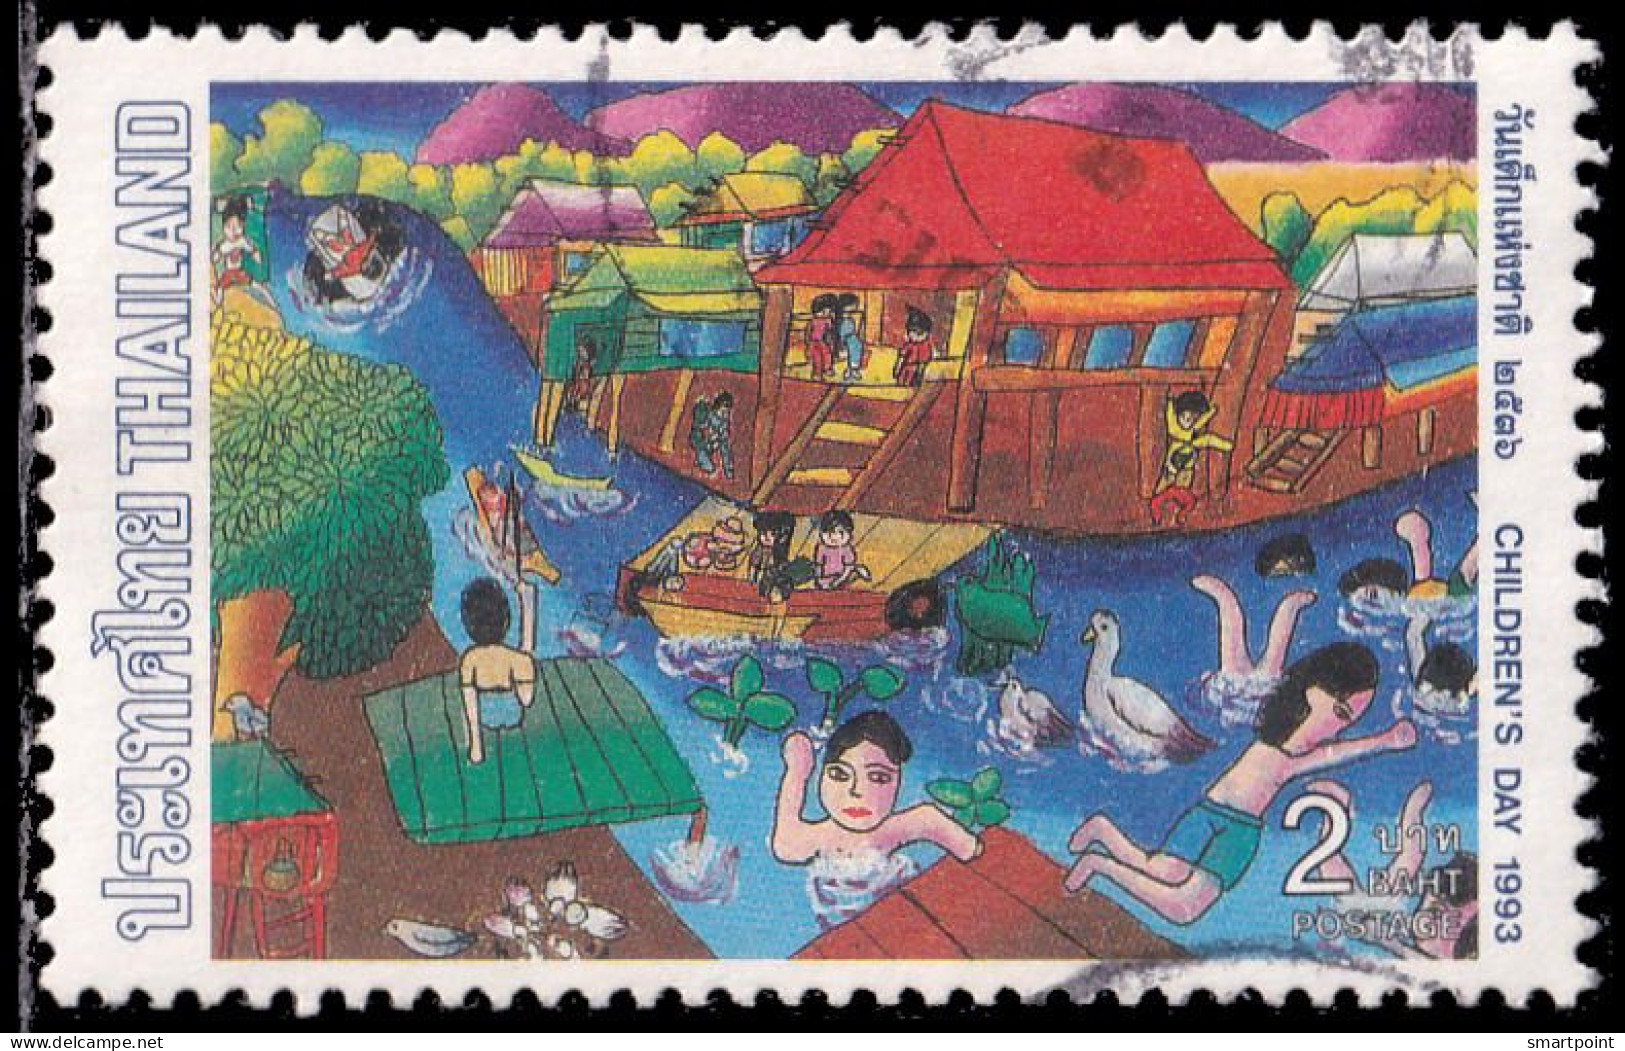 Thailand Stamp 1993 Children's Day 2 Baht - Used - Thailand